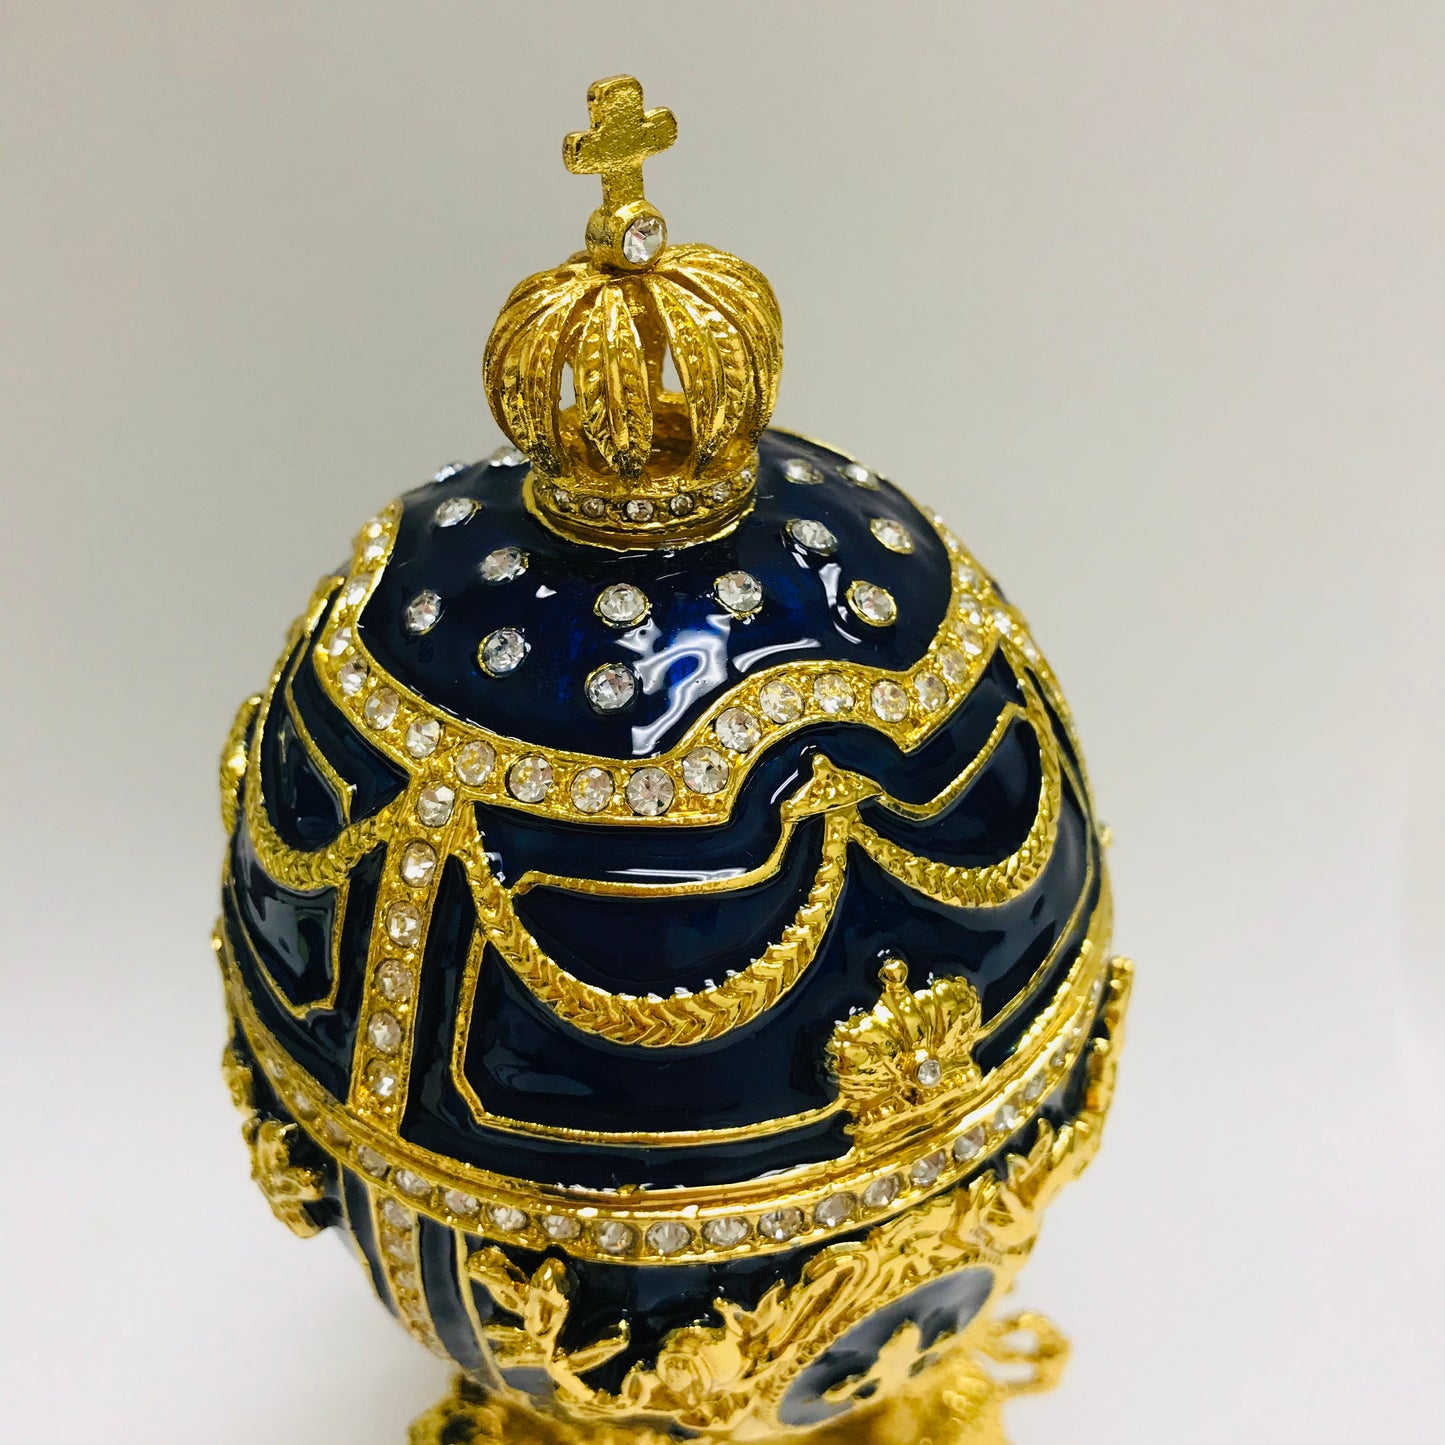 Cristiani Collezione Large Blue Gold Lion Musical Egg Trinket Box.